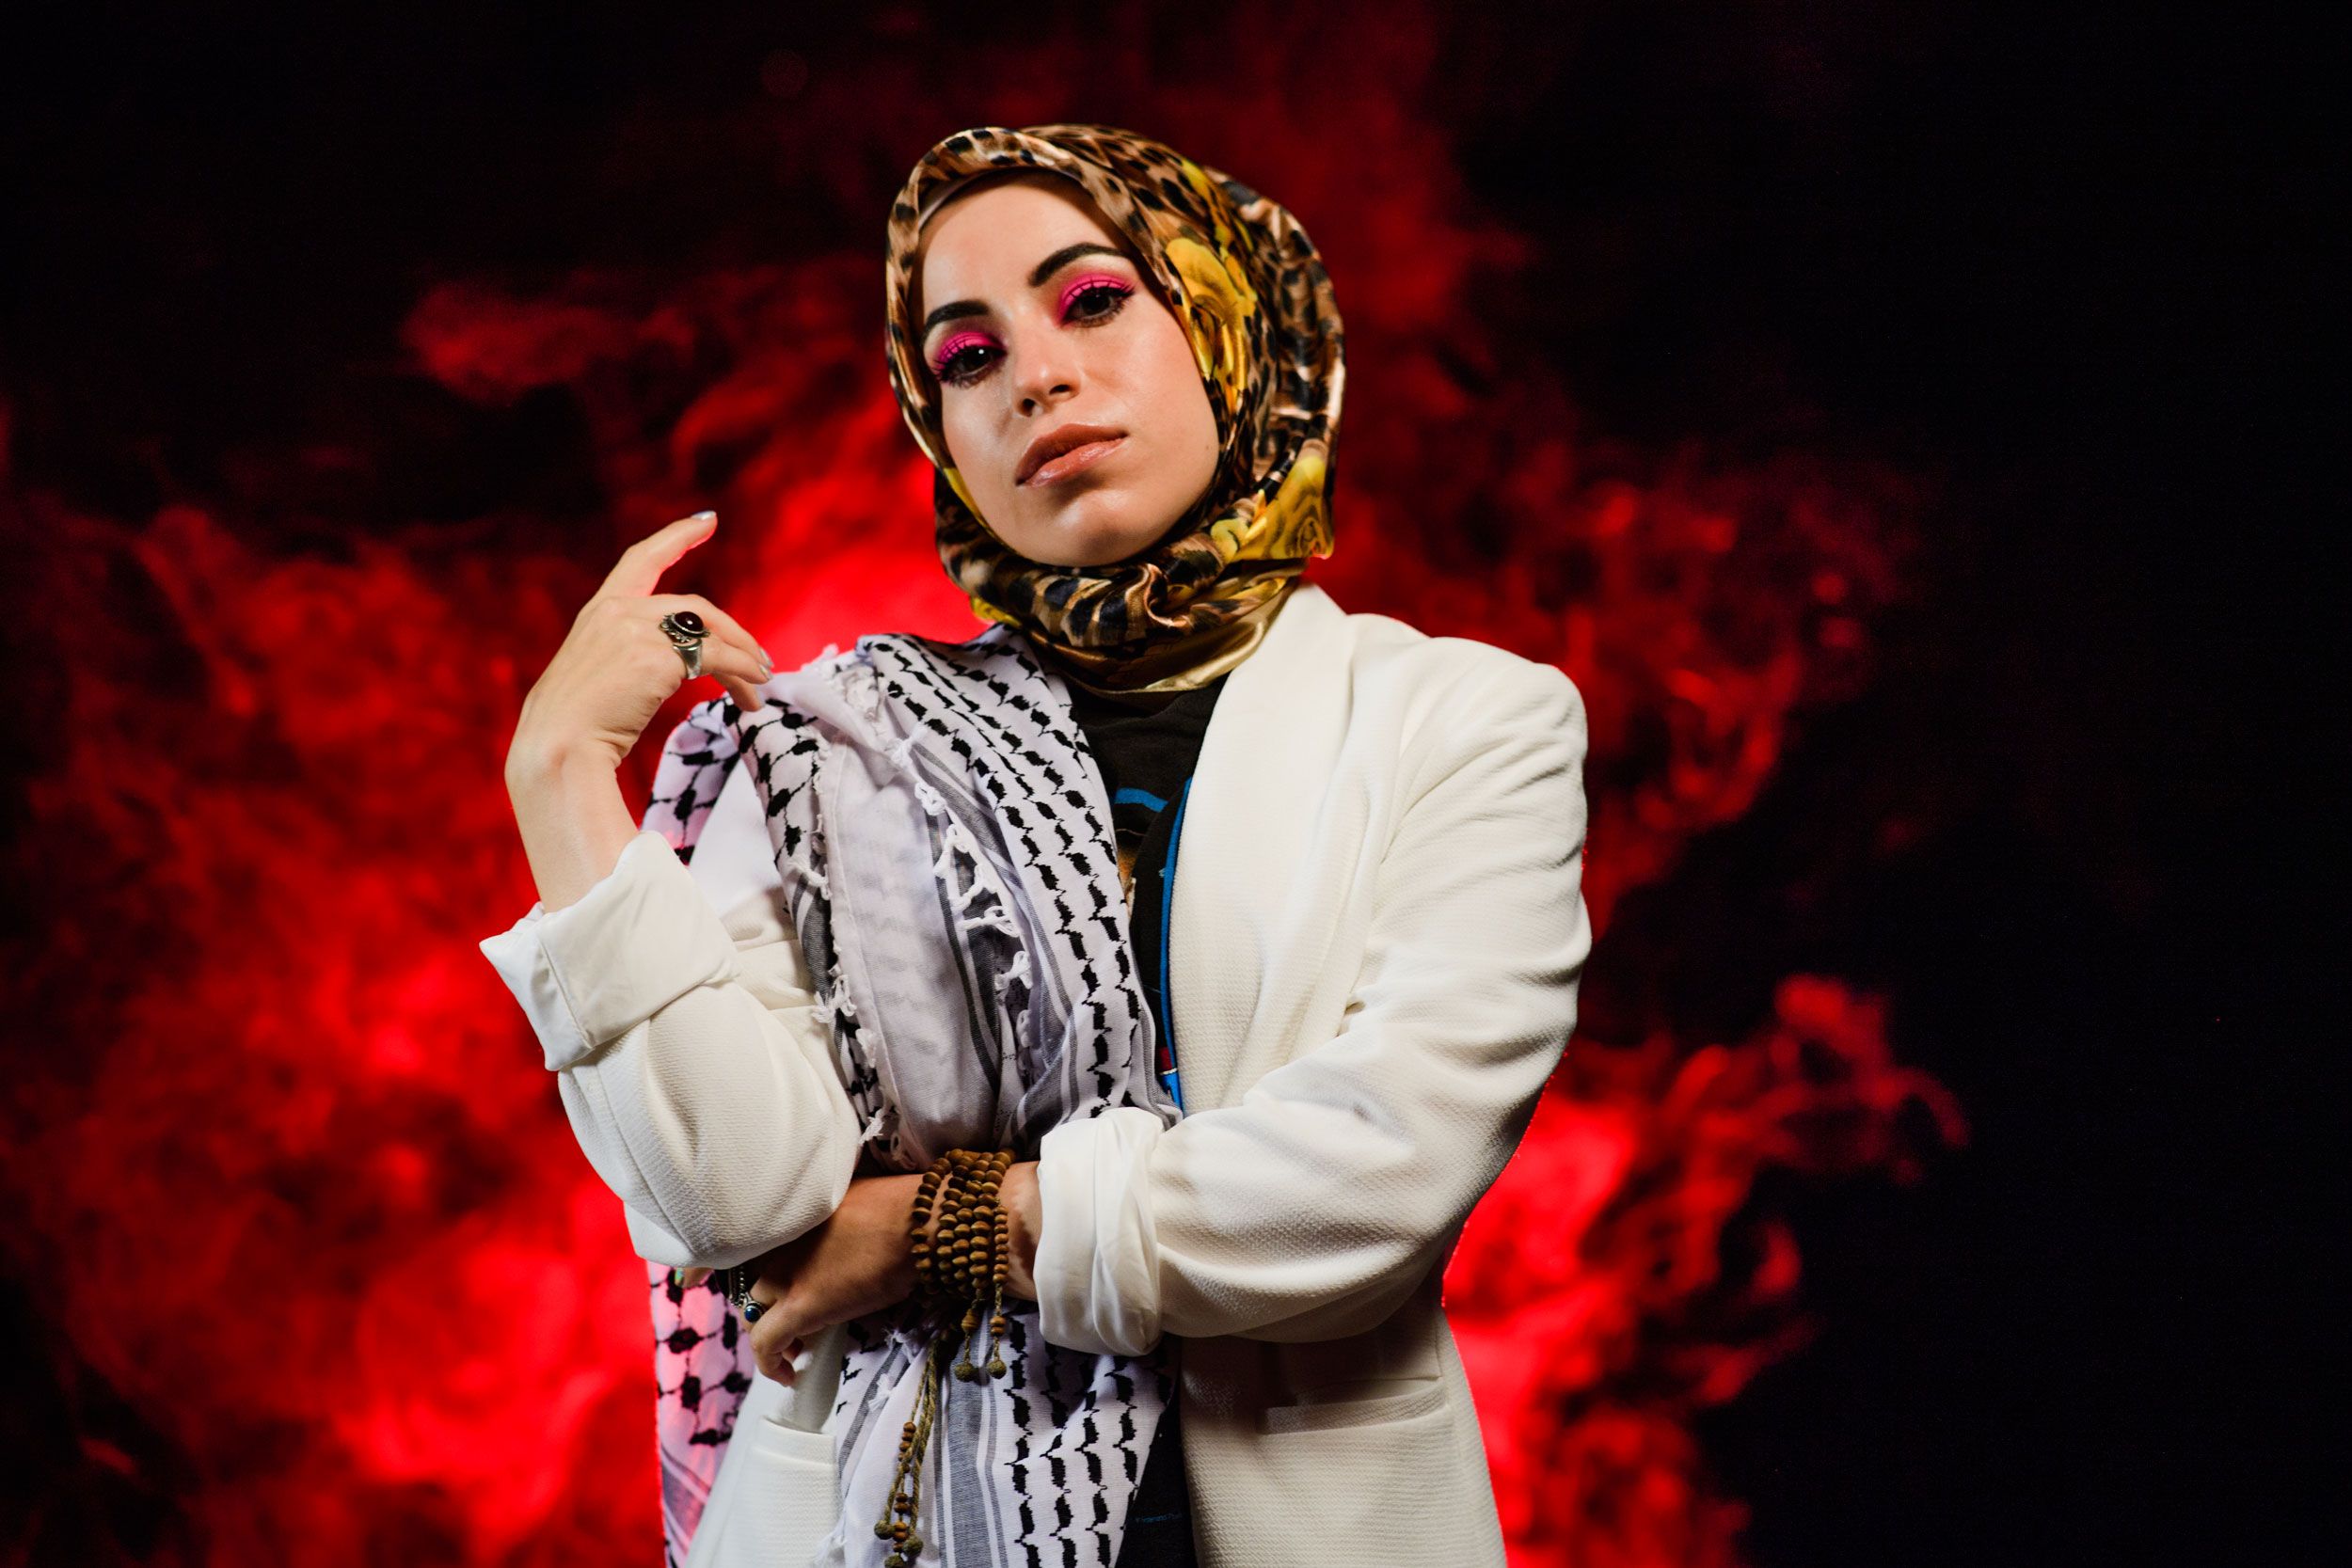 Hot Sex Muslim Girls With Uniform - Mona Haydar Is Not a Monolith